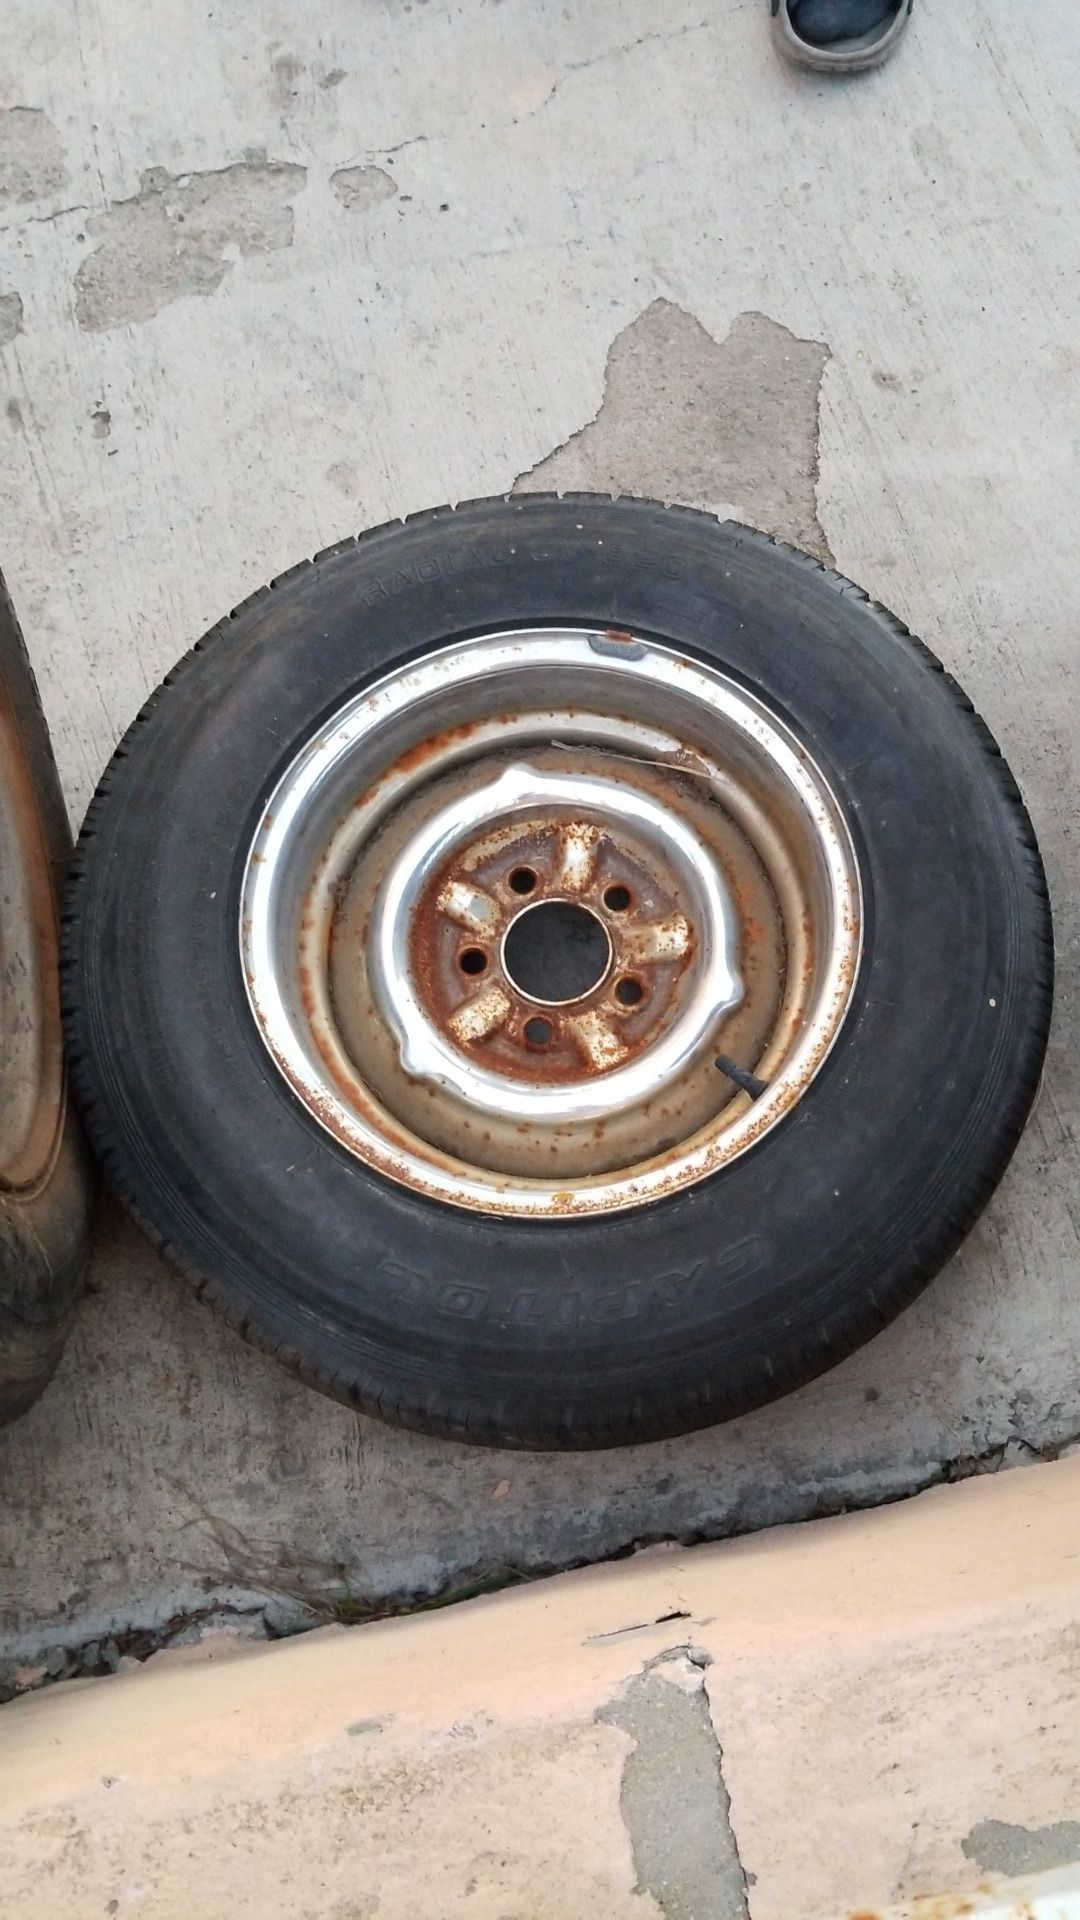 4 1/4 8 ply tires on 14" chrome rims